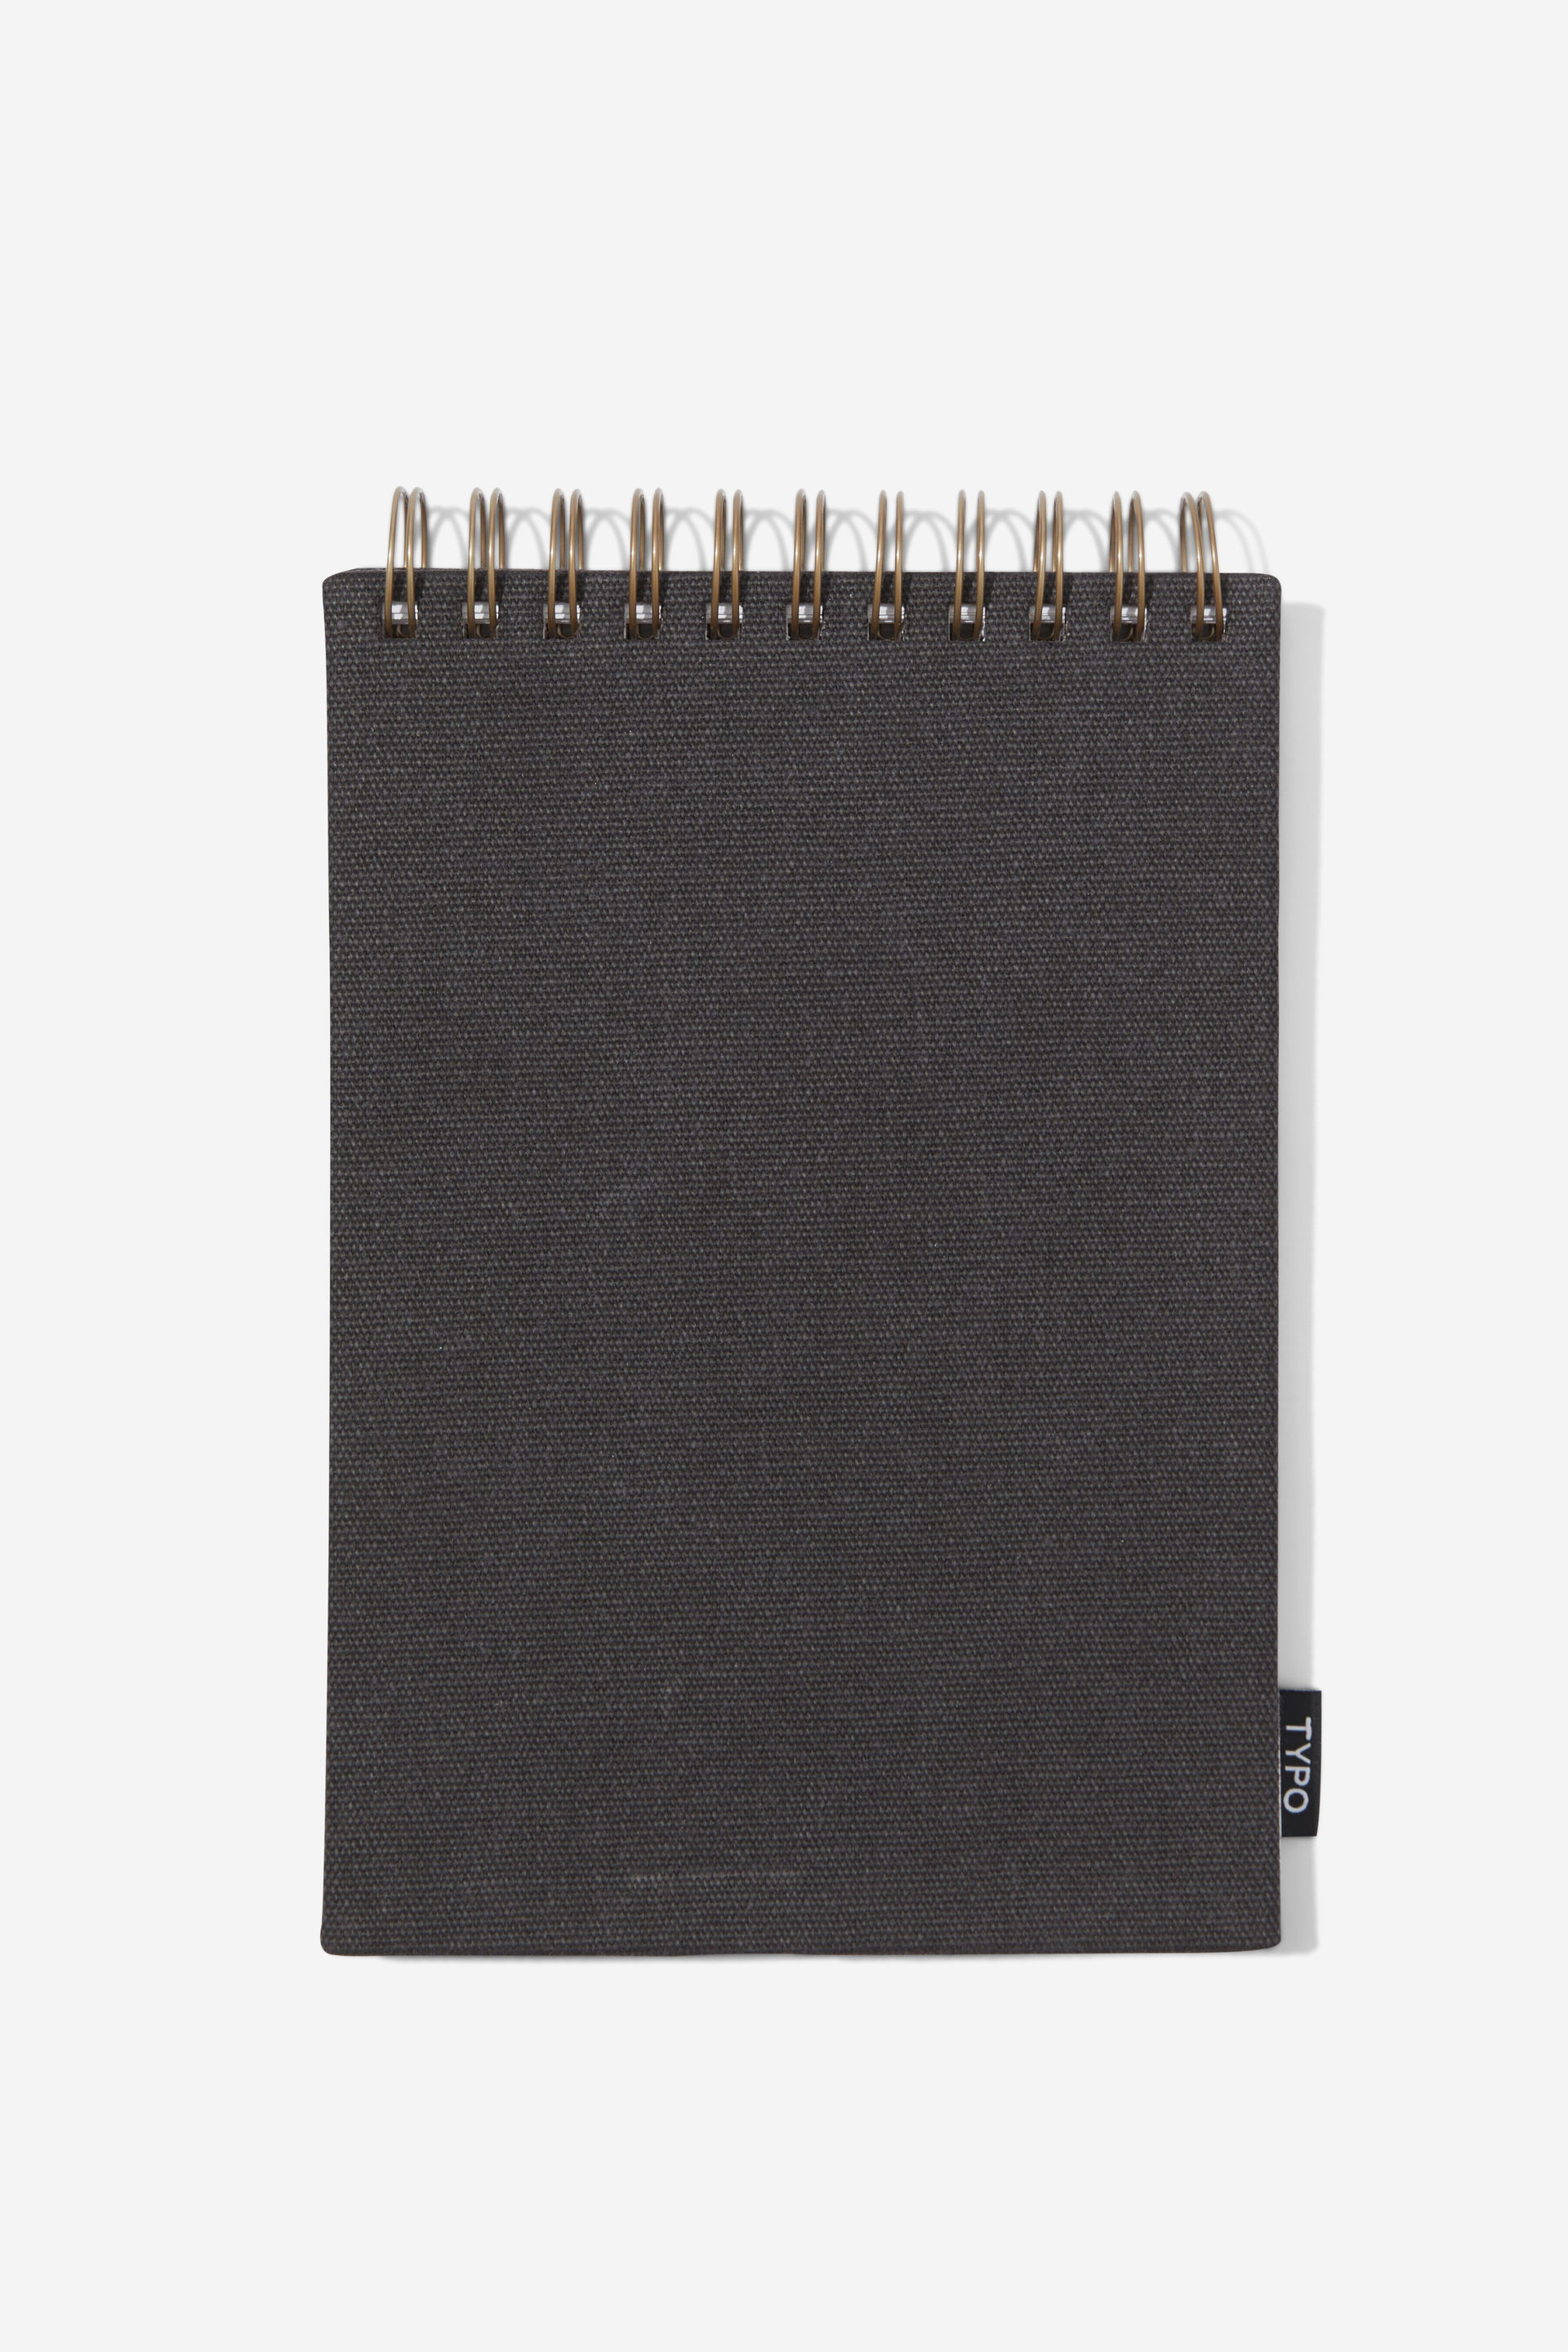 Typo - A5 Spiral Sketch Book - Black